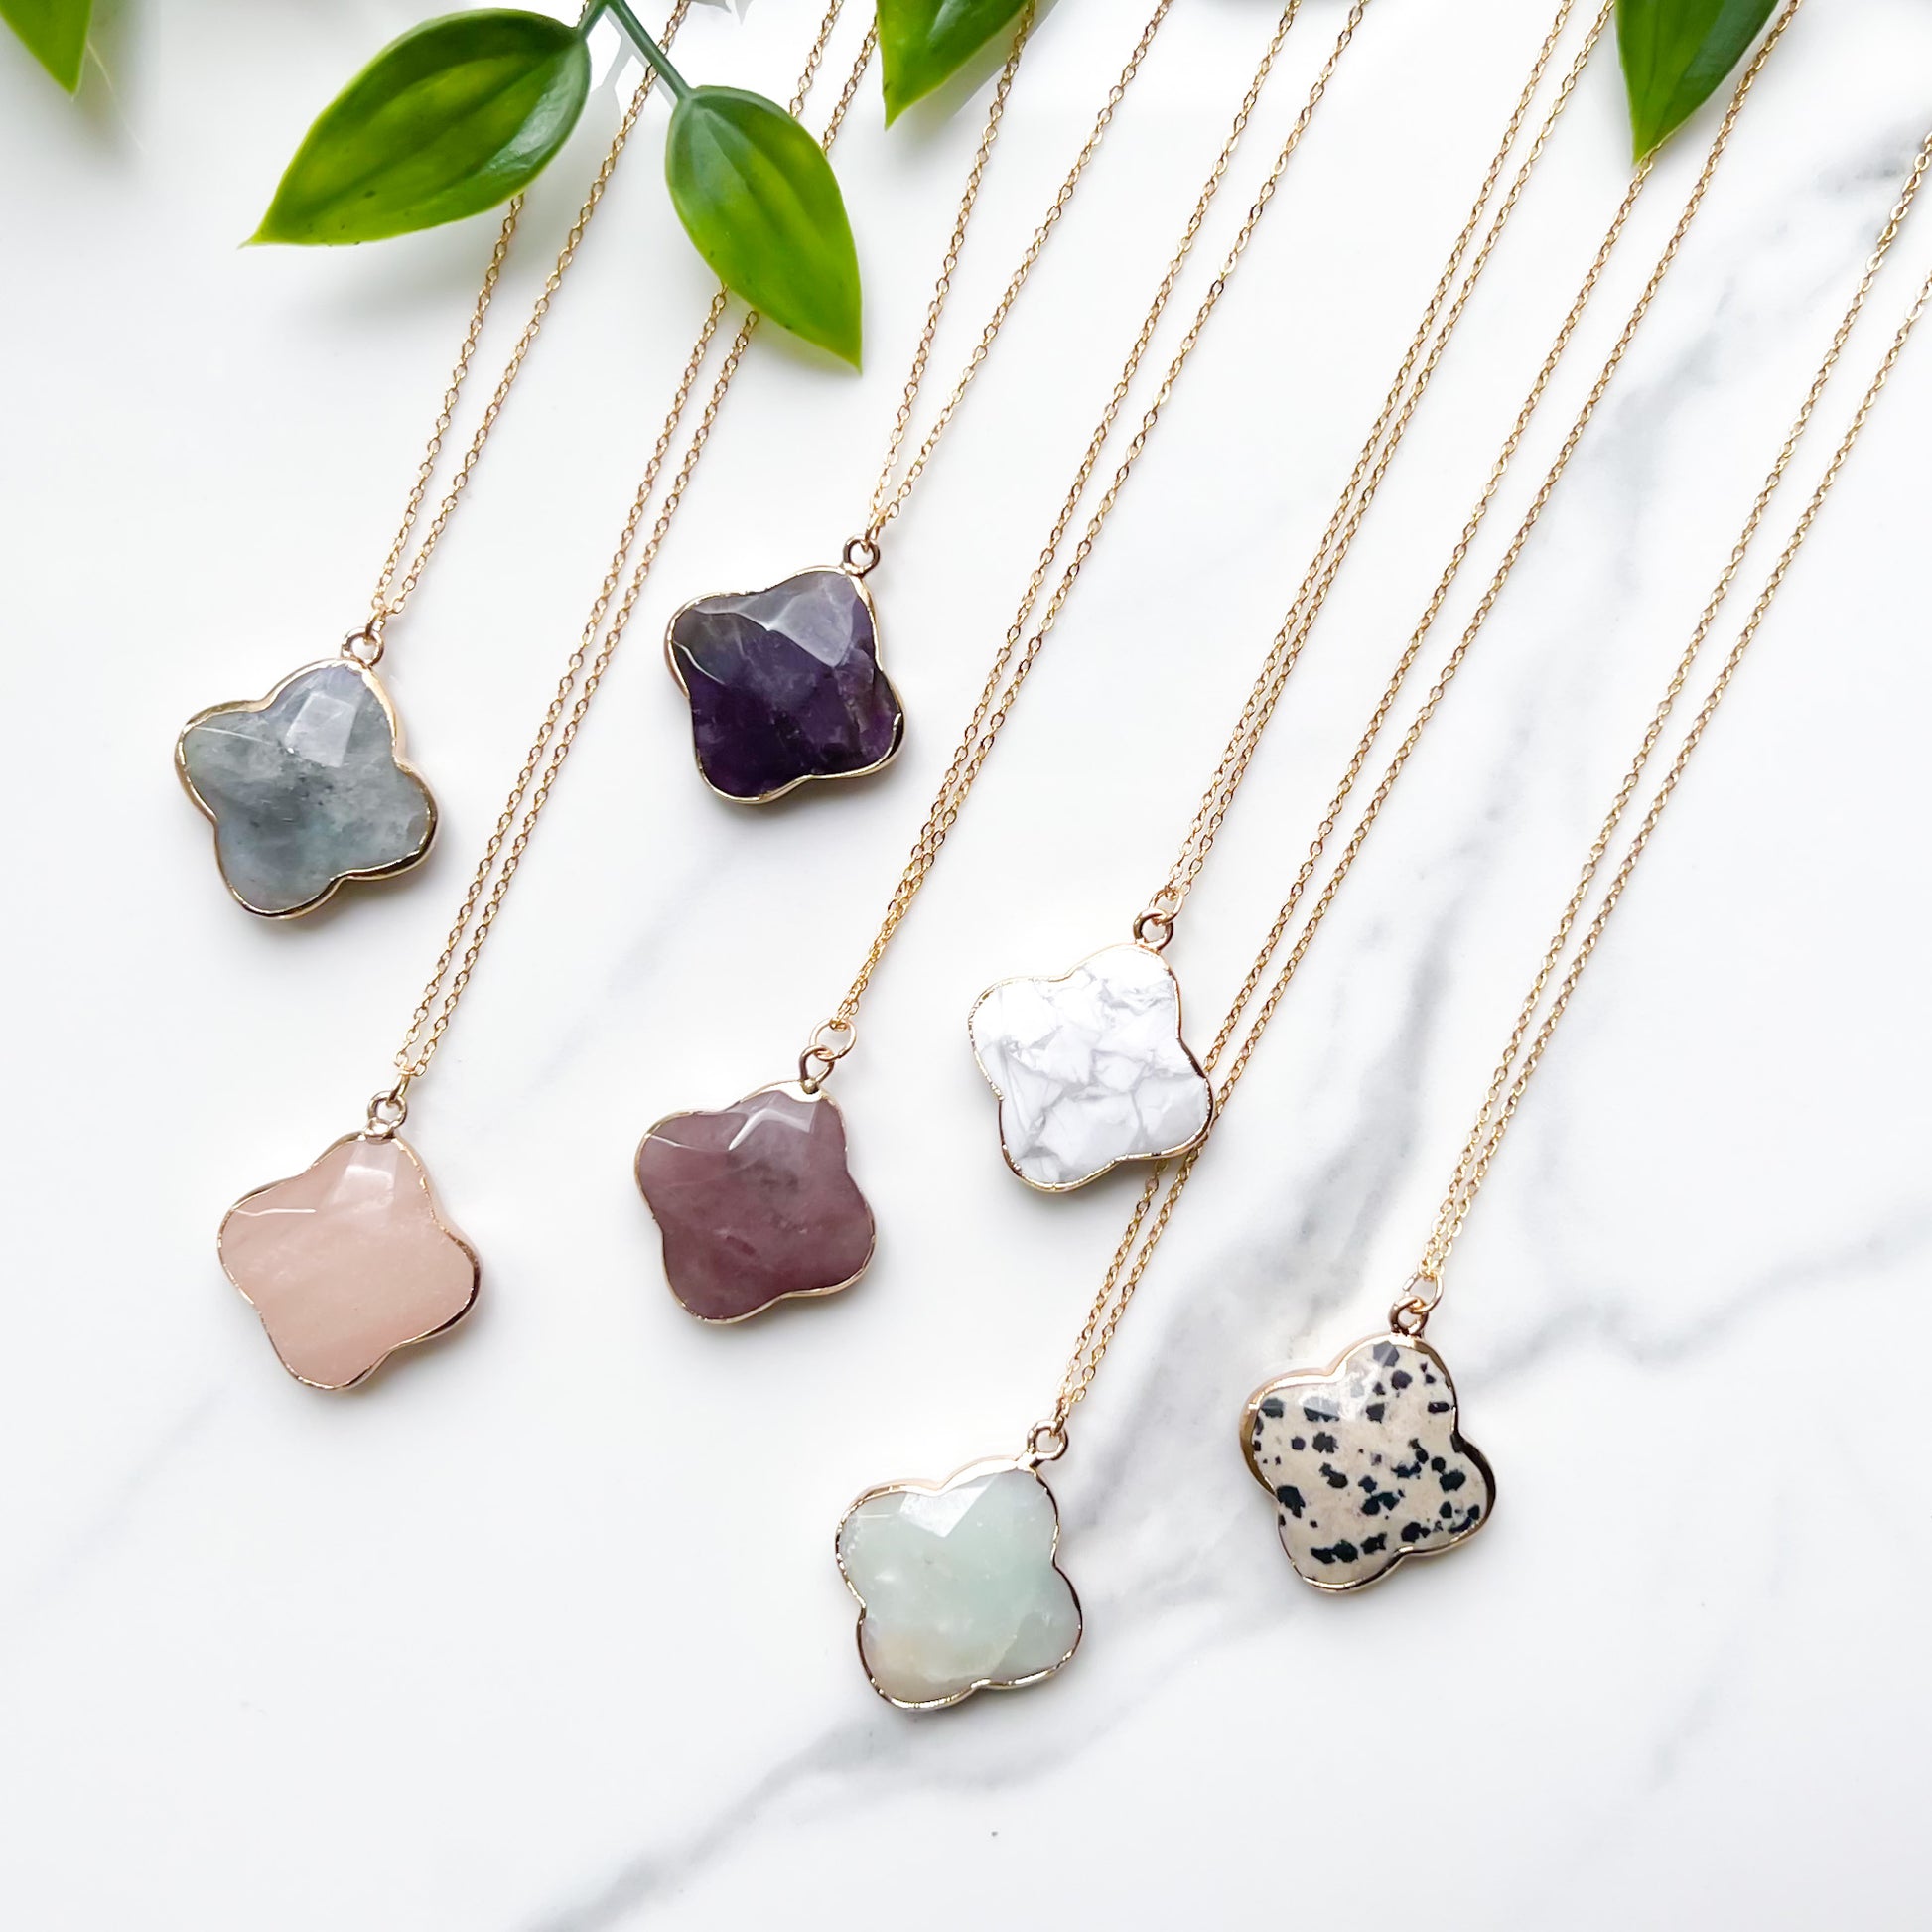 Semi precious healing gemstone clover shaped pendant necklaces